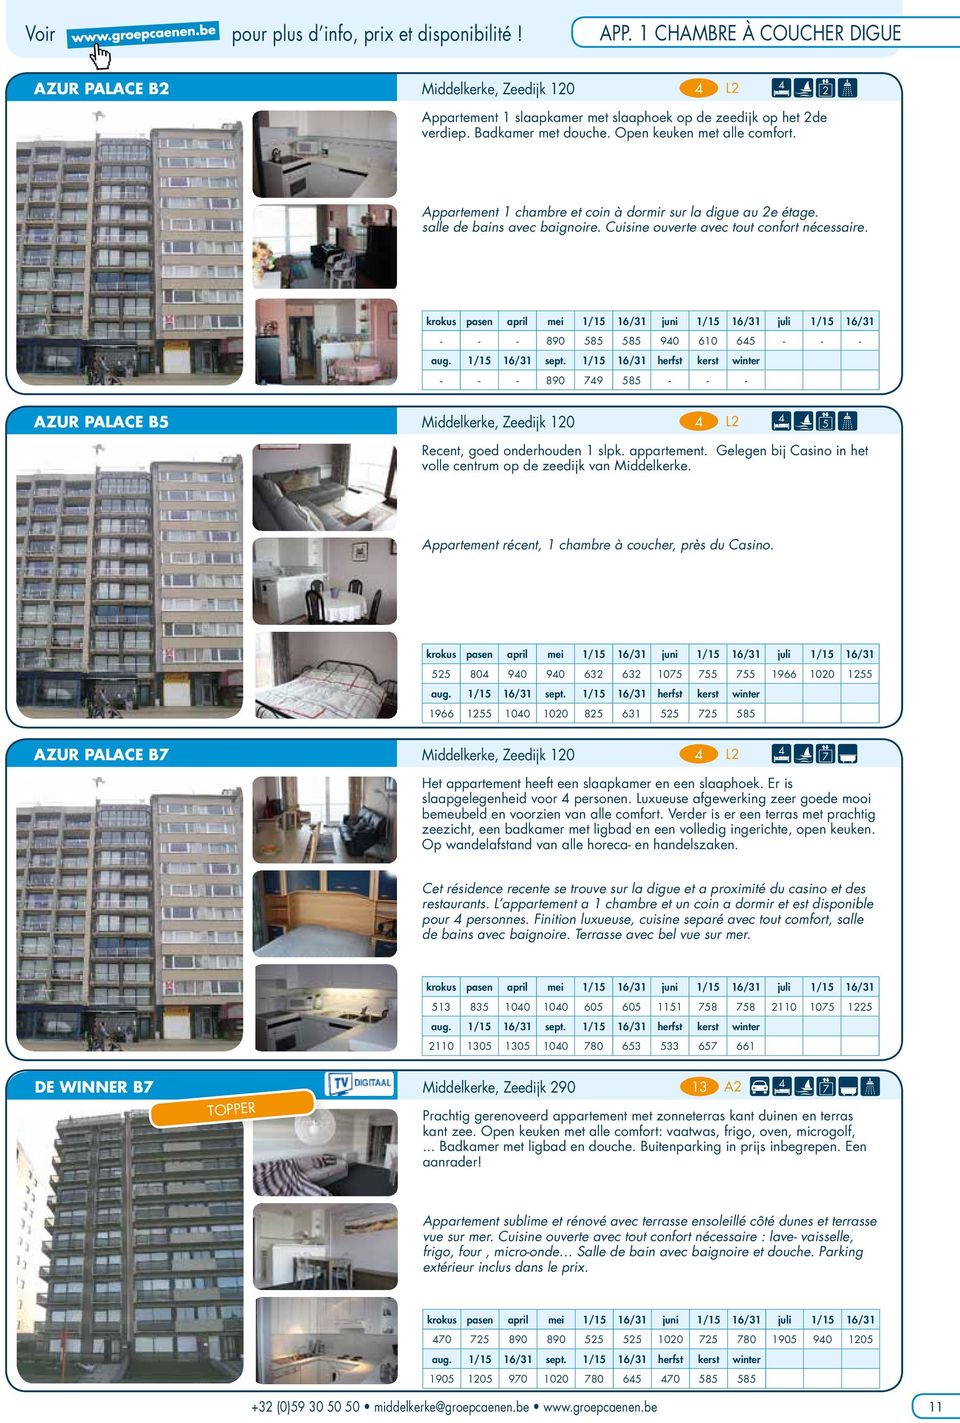 - - - 890 8 8 90 10 - - - - - - 890 79 8 - - - AZUR PALACE B Middelkerke, Zeedijk 10 L Recent, goed onderhouden 1 slpk. appartement.